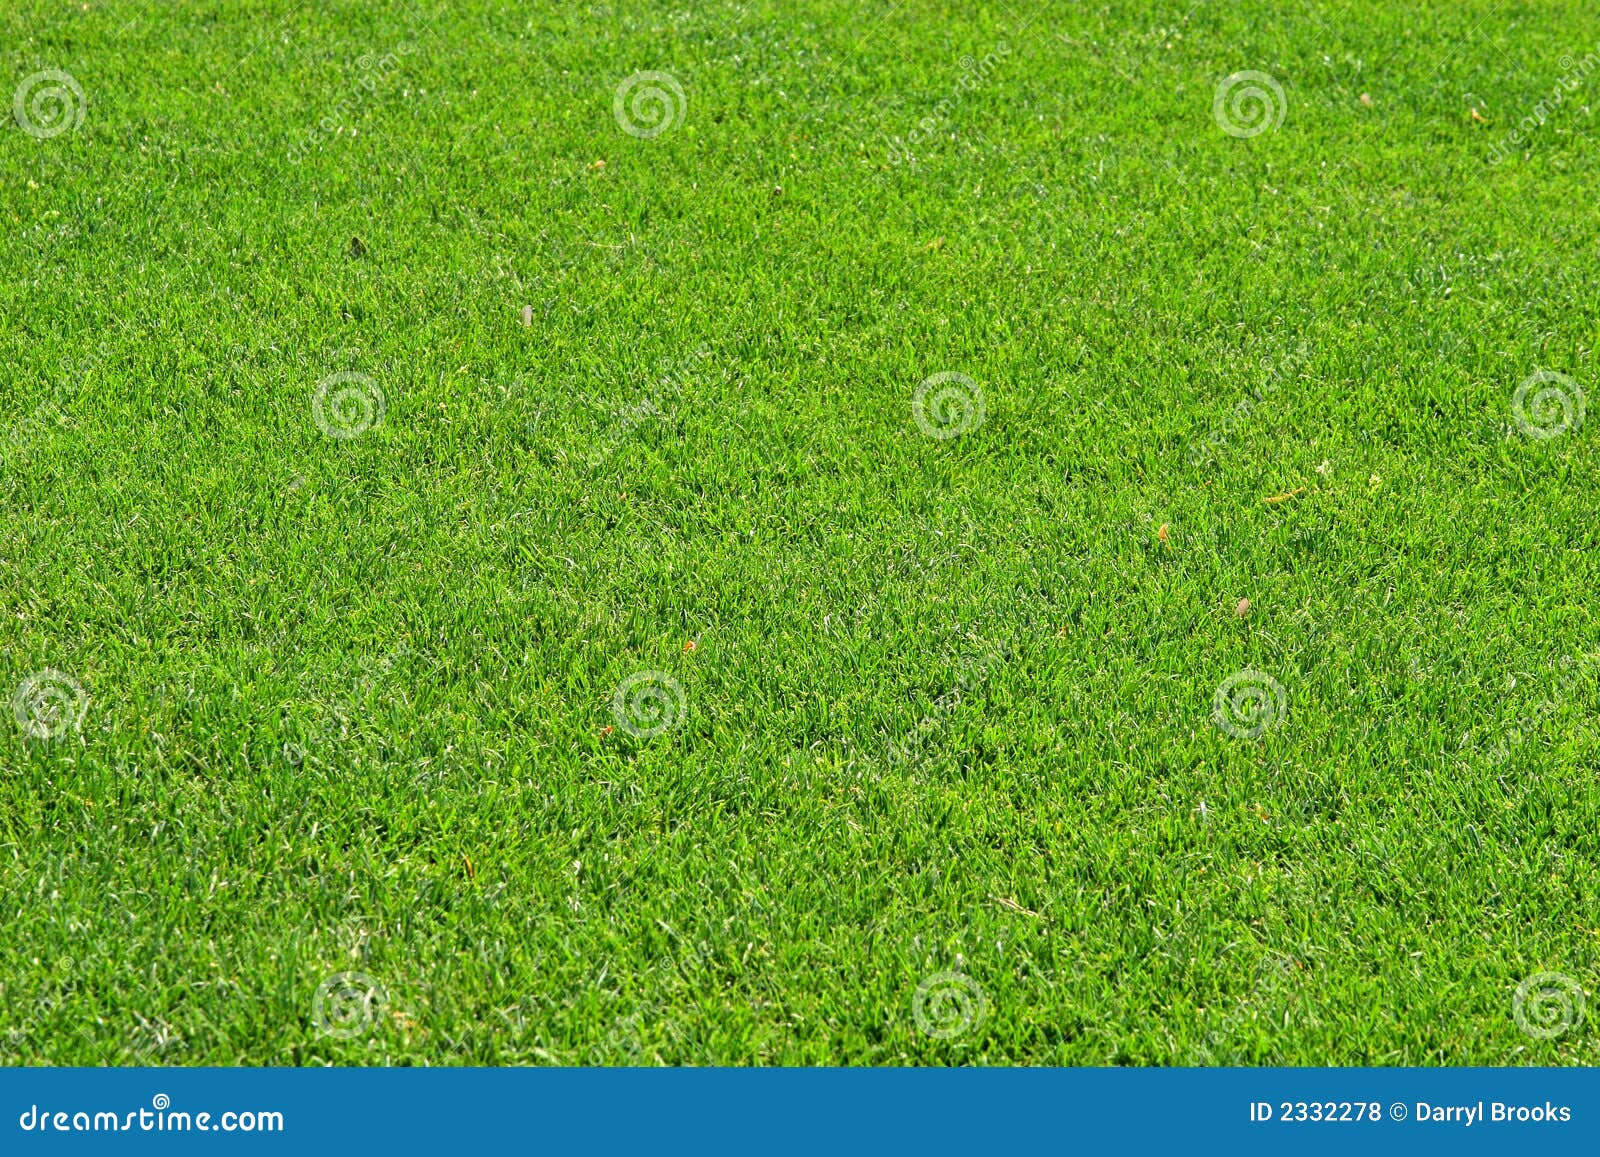 Fescue Grass Stock Photo Image Of Plant Closeup Garden 2332278